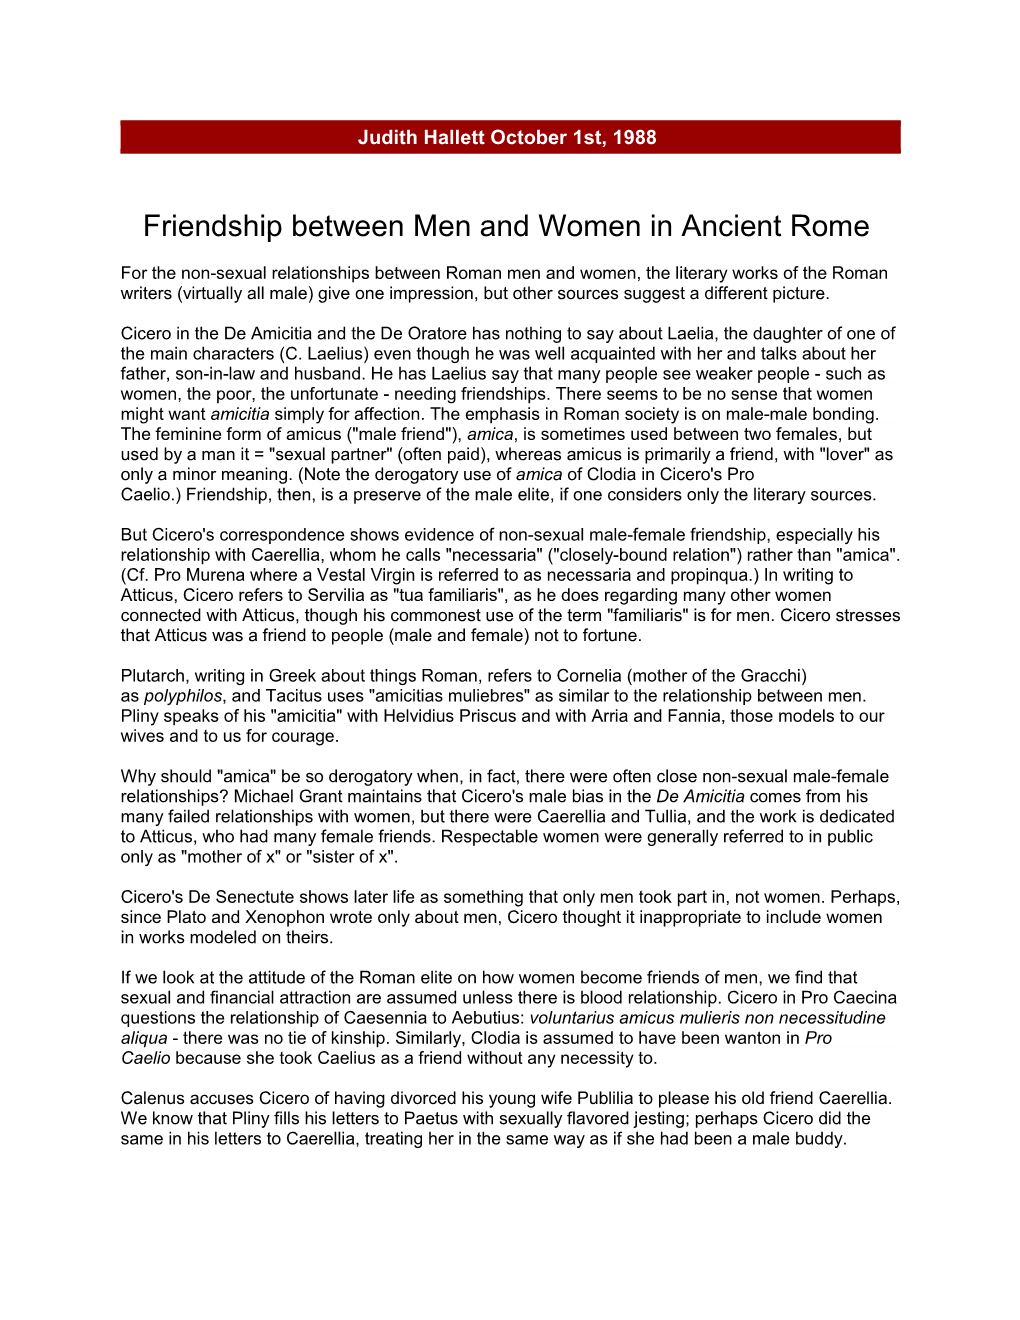 Friendship Between Men and Women in Ancient Rome